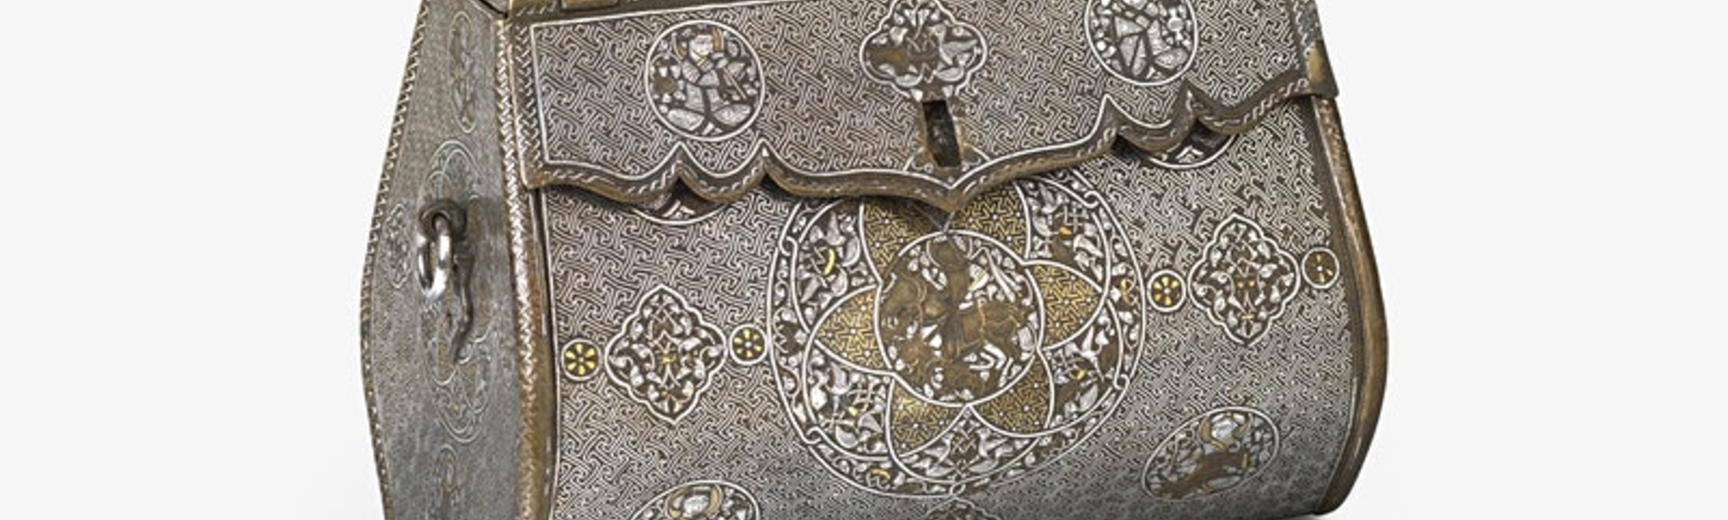 Islamic Metalwork Handbag from The Courtauld